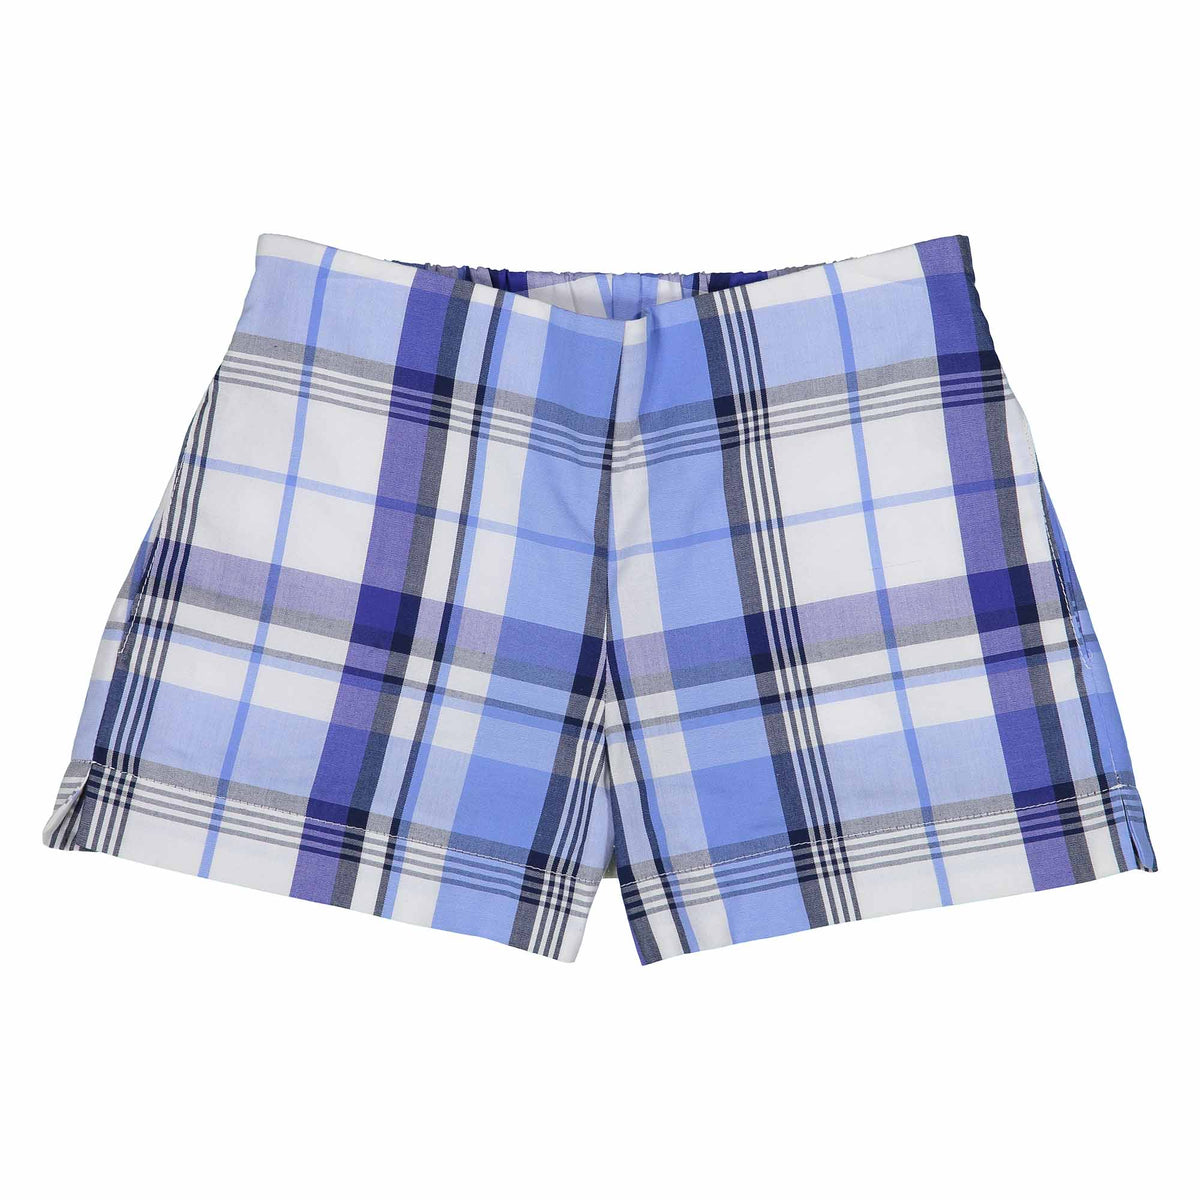 Classic and Preppy Harper Short, Blue Plaid - FINAL SALE-Shorts-Blue Plaid-2T-CPC - Classic Prep Childrenswear